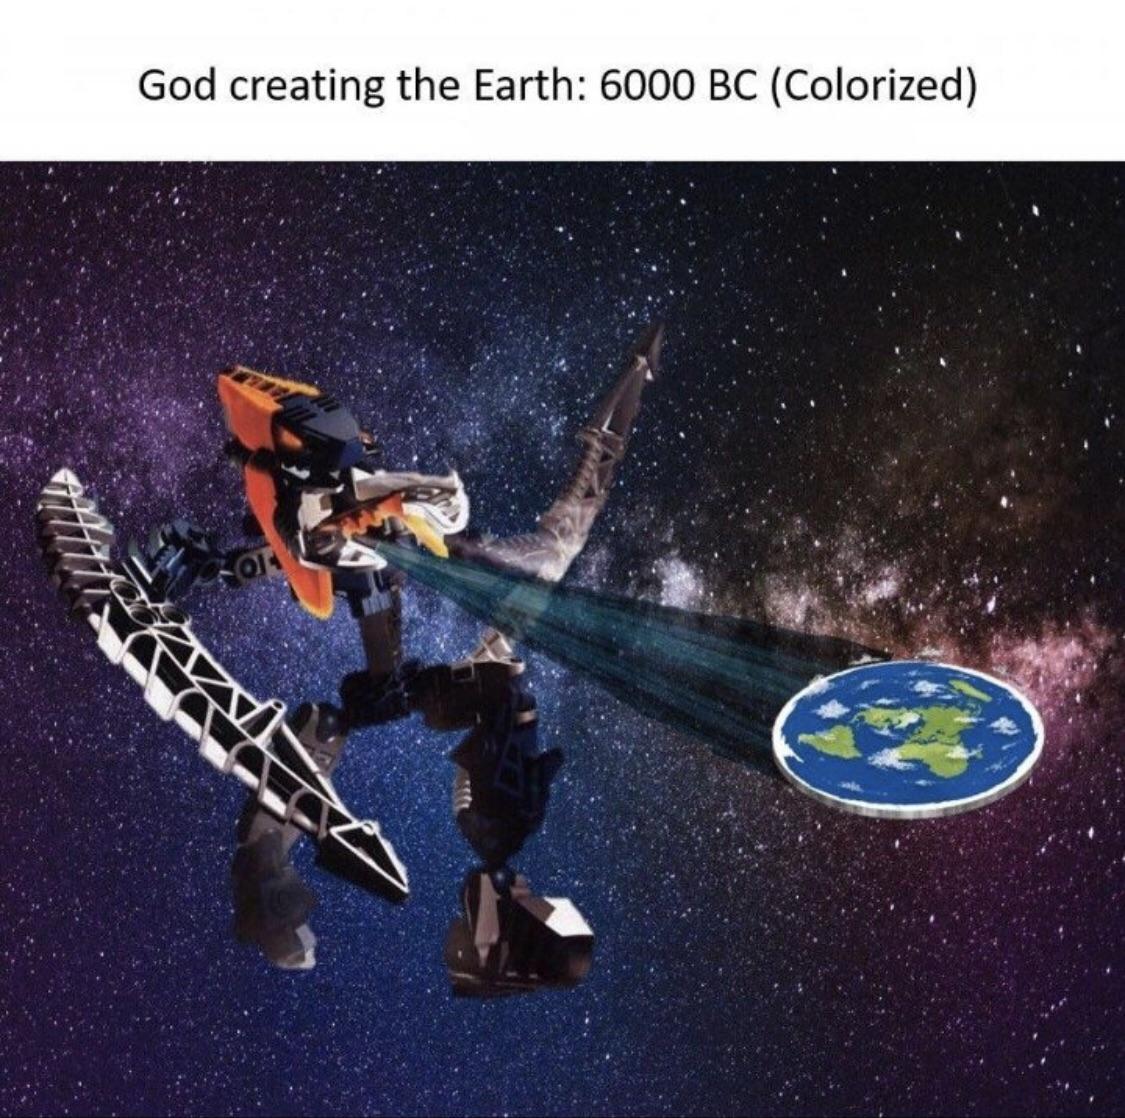 bionicle flat earth meme - God creating the Earth 6000 Bc Colorized